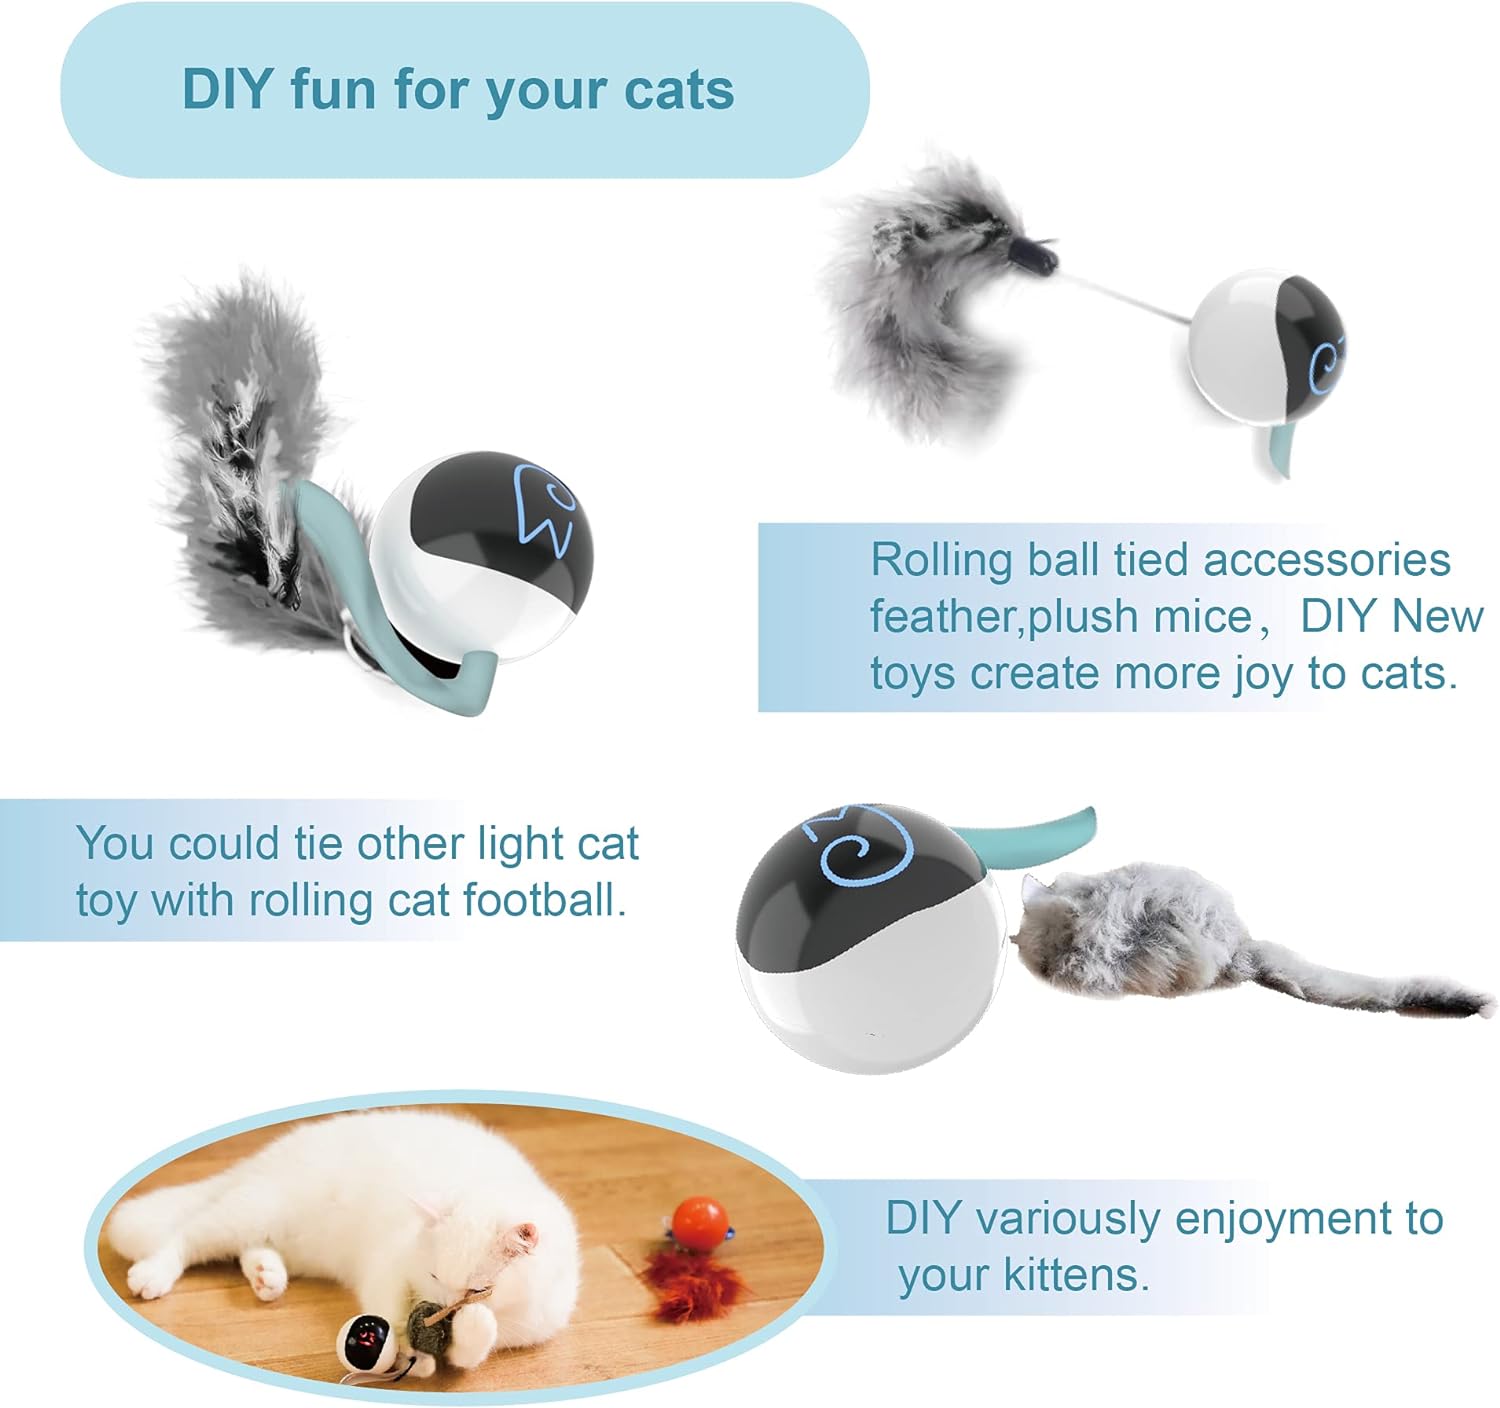 Migipaws Juguetes para gatos, paquete de bolas móviles automáticas, ratones